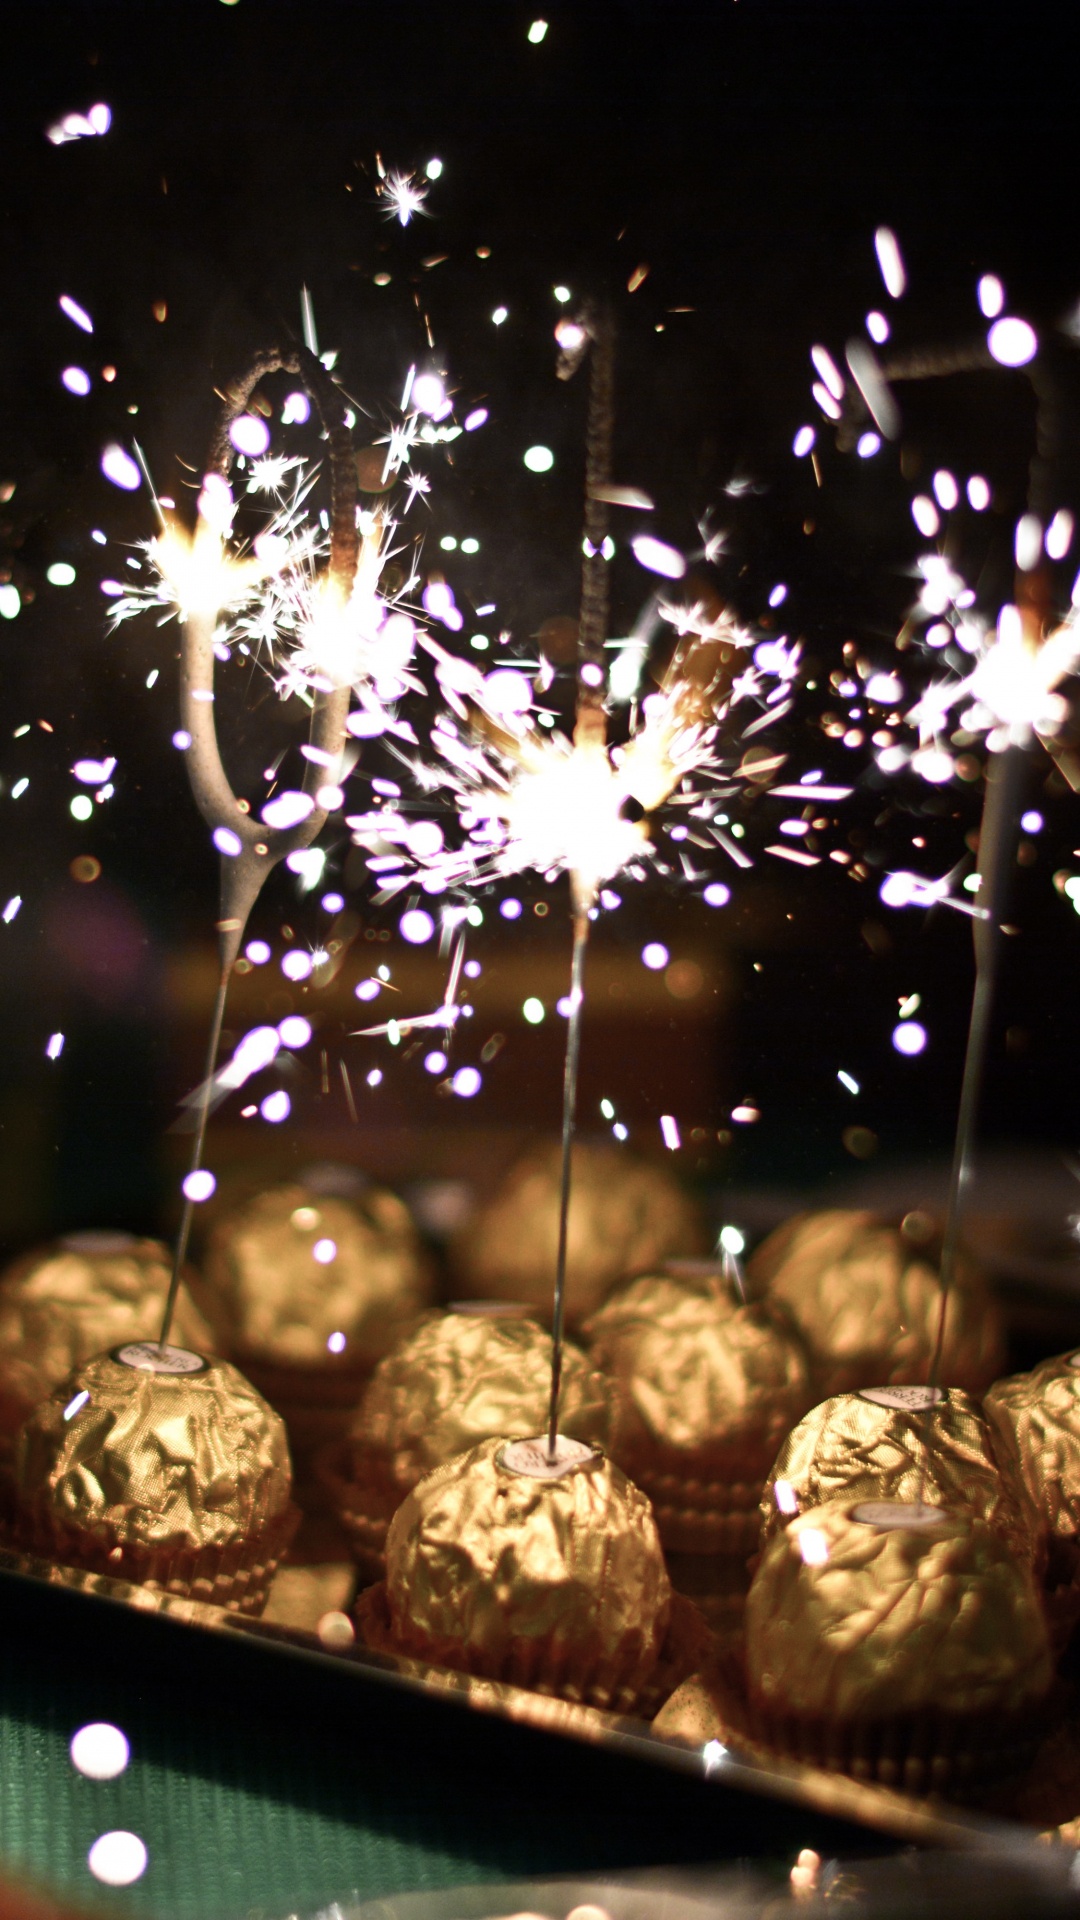 Chocolate Balls, Candy, Chocolate, Fireworks, Sparkler. Wallpaper in 1080x1920 Resolution